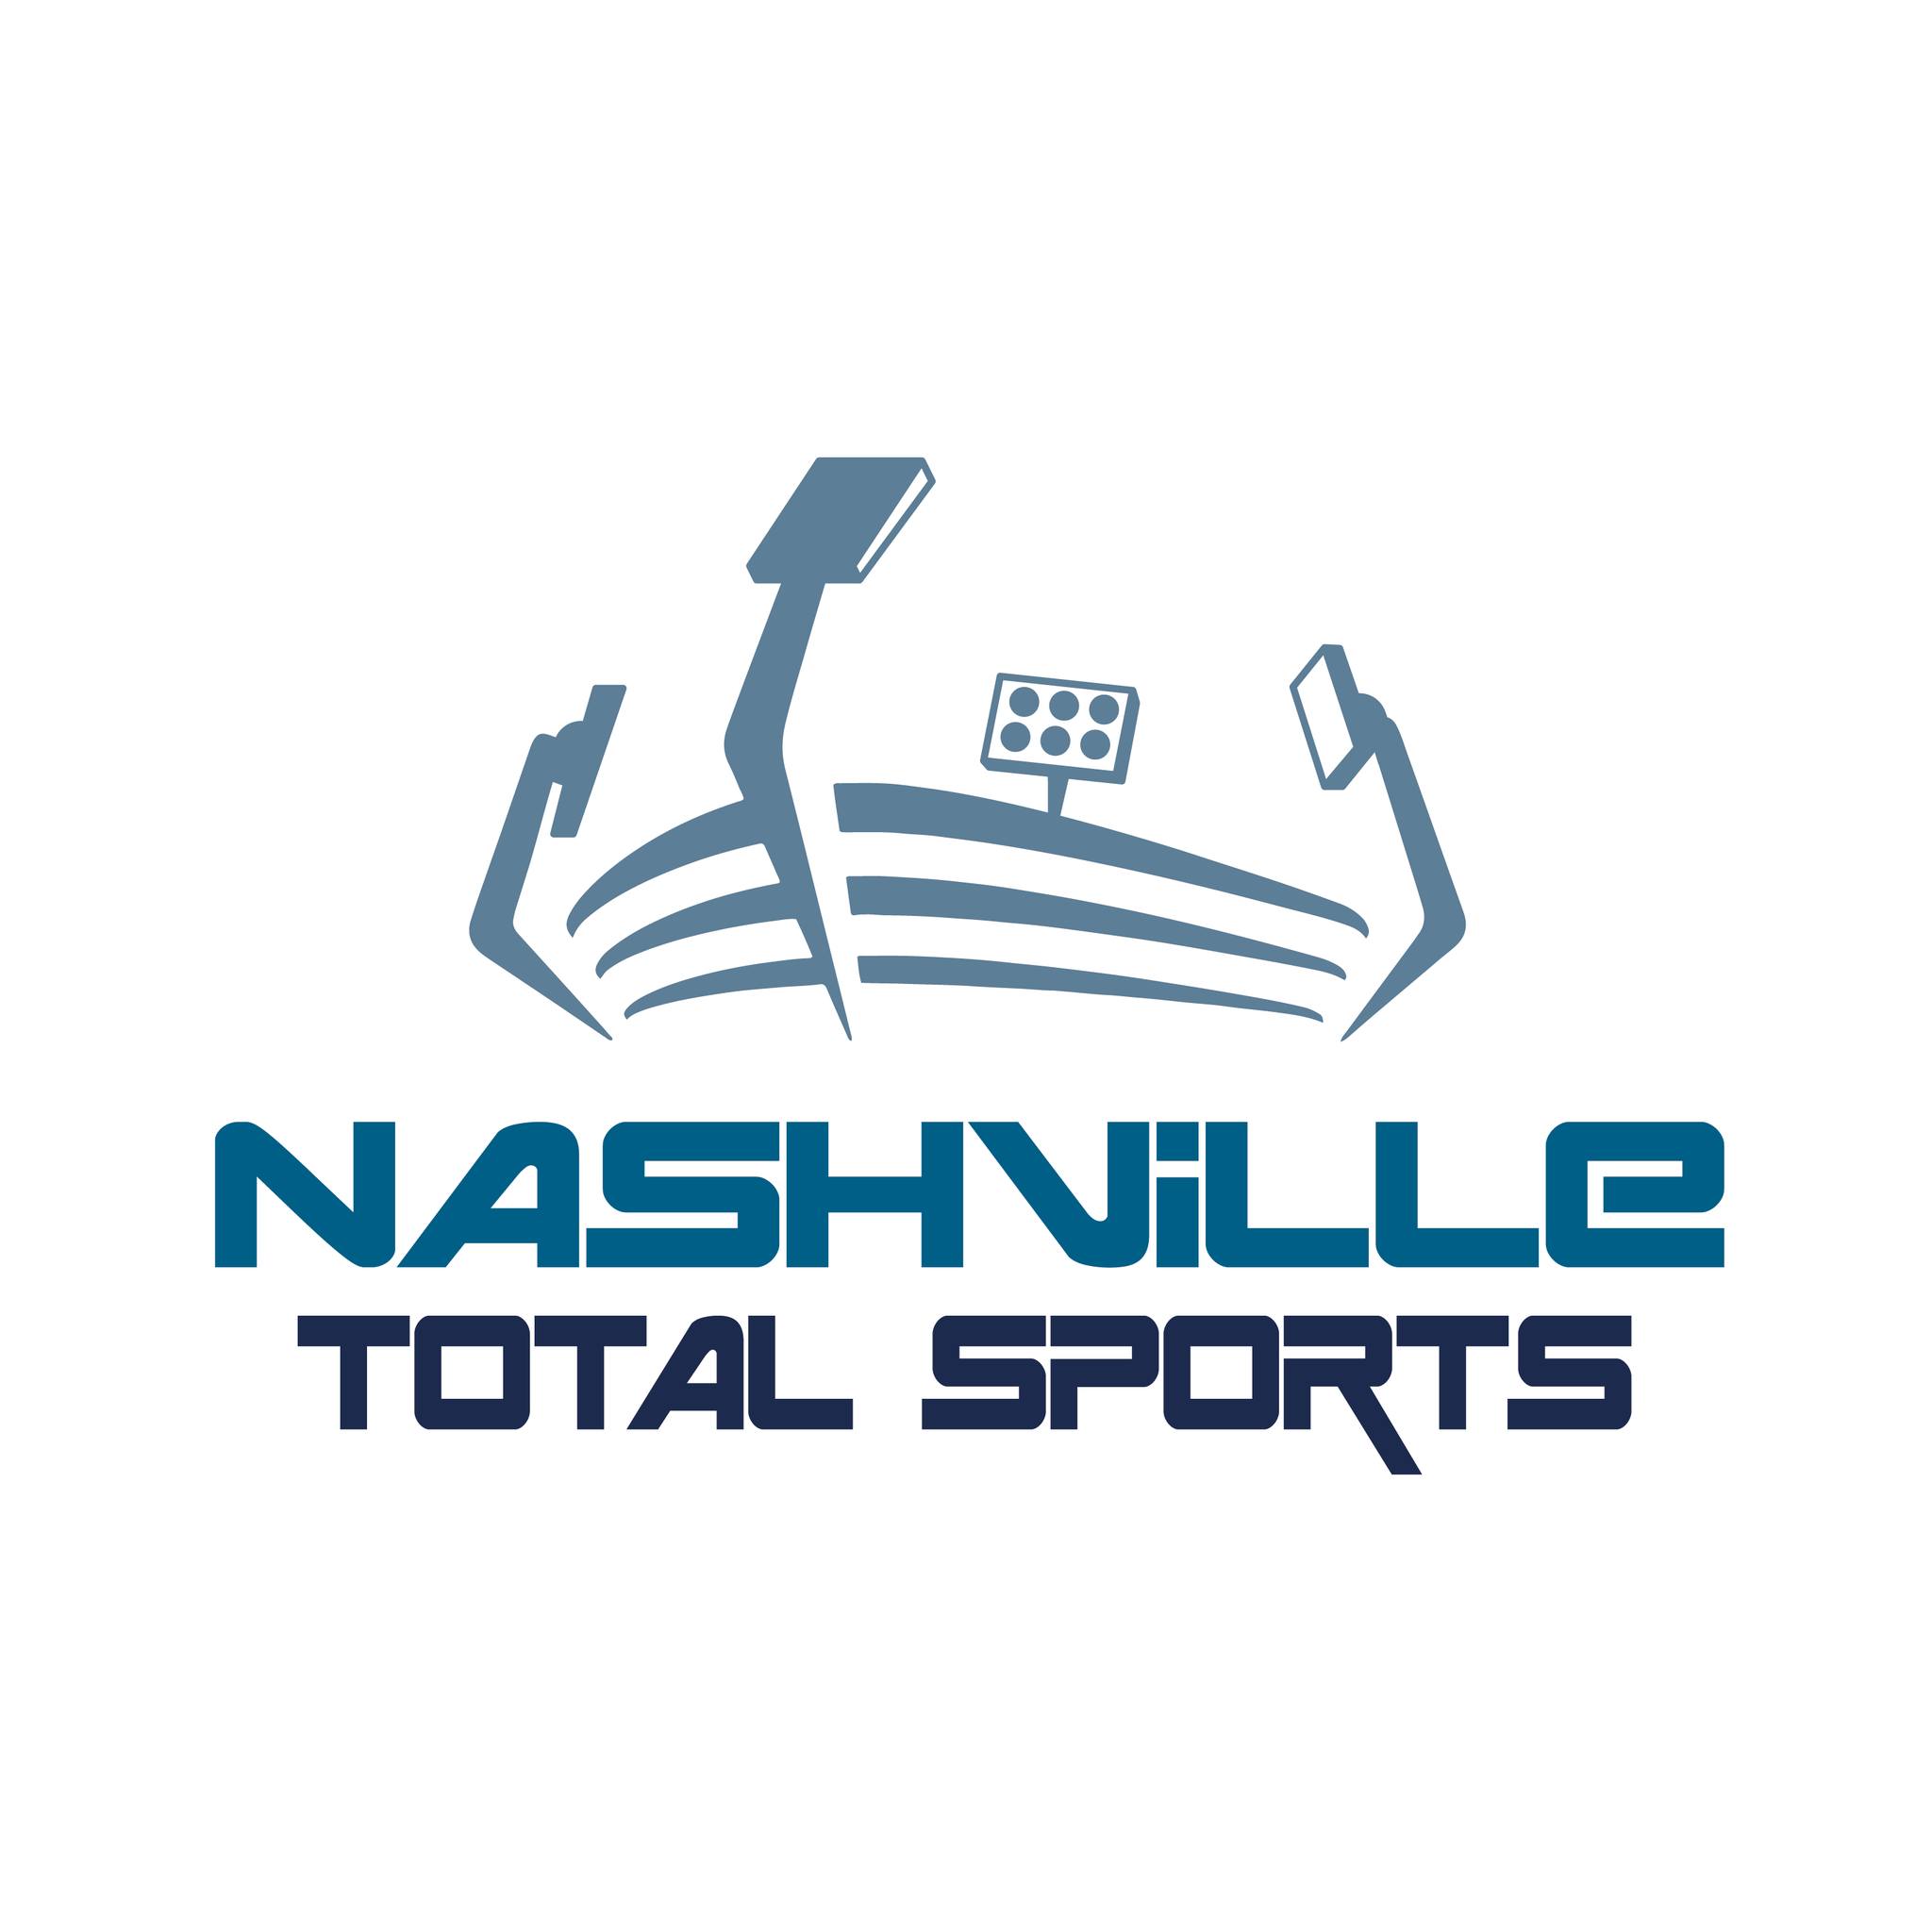 Nashville Total Sports